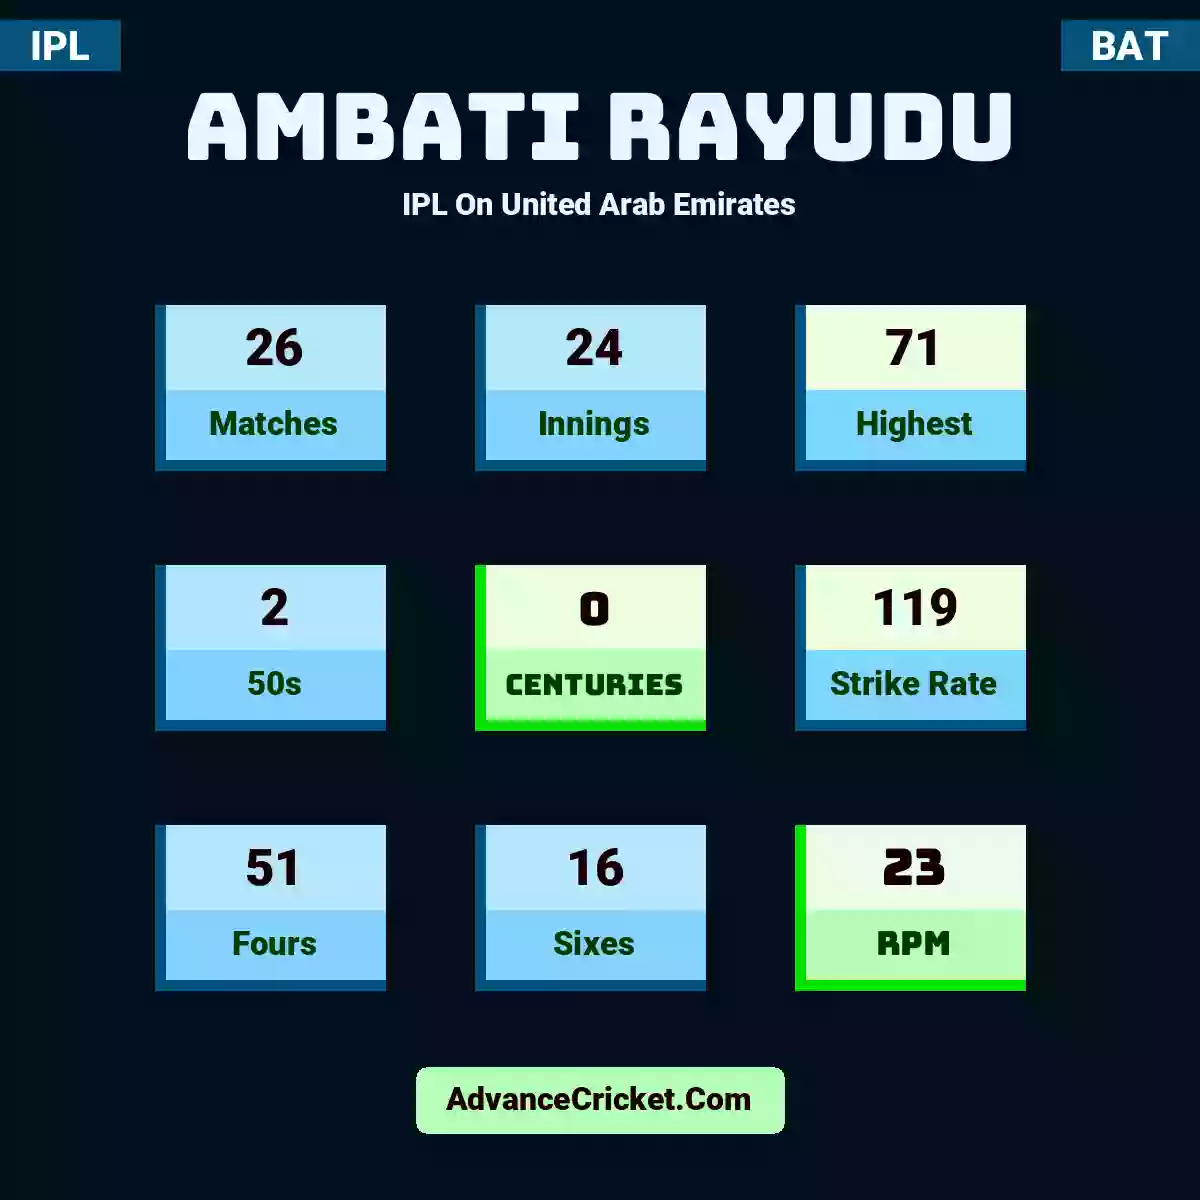 Ambati Rayudu IPL  On United Arab Emirates, Ambati Rayudu played 26 matches, scored 71 runs as highest, 2 half-centuries, and 0 centuries, with a strike rate of 119. A.Rayudu hit 51 fours and 16 sixes, with an RPM of 23.